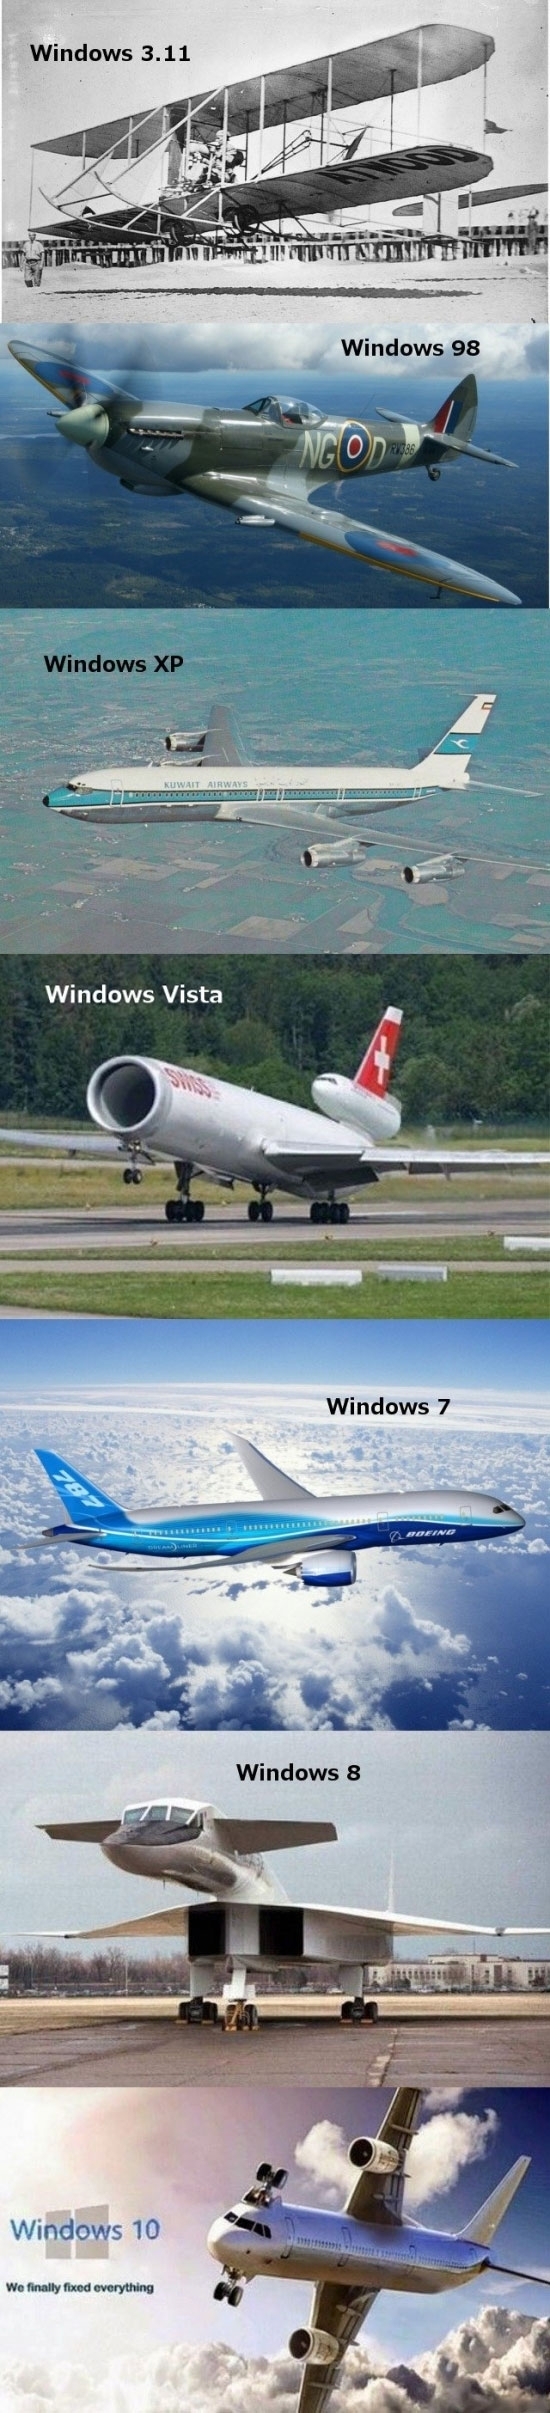 aviones,Fail,todo arreglado ya,Windows,Windows 10,Windows 8